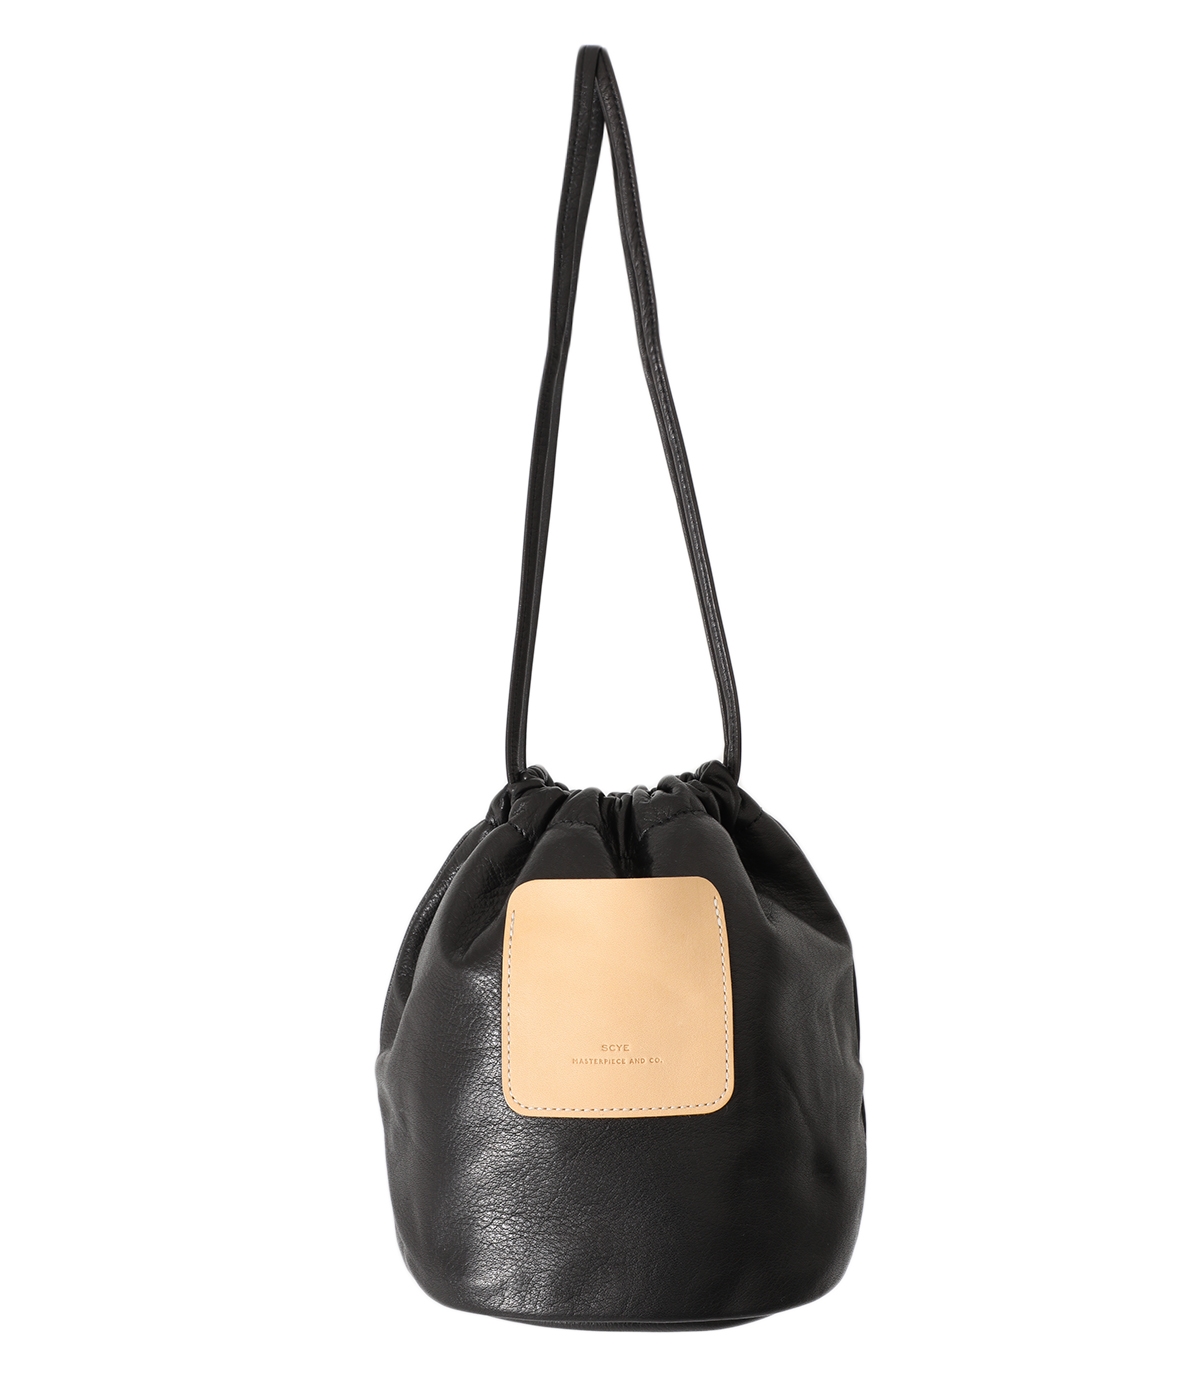 Scye   サイ ベーシックス Soft Leather Drawstring Bag   全2色 ソフト レザー ドローストリング バッグ 鞄 牛革 レザー 3323-11320